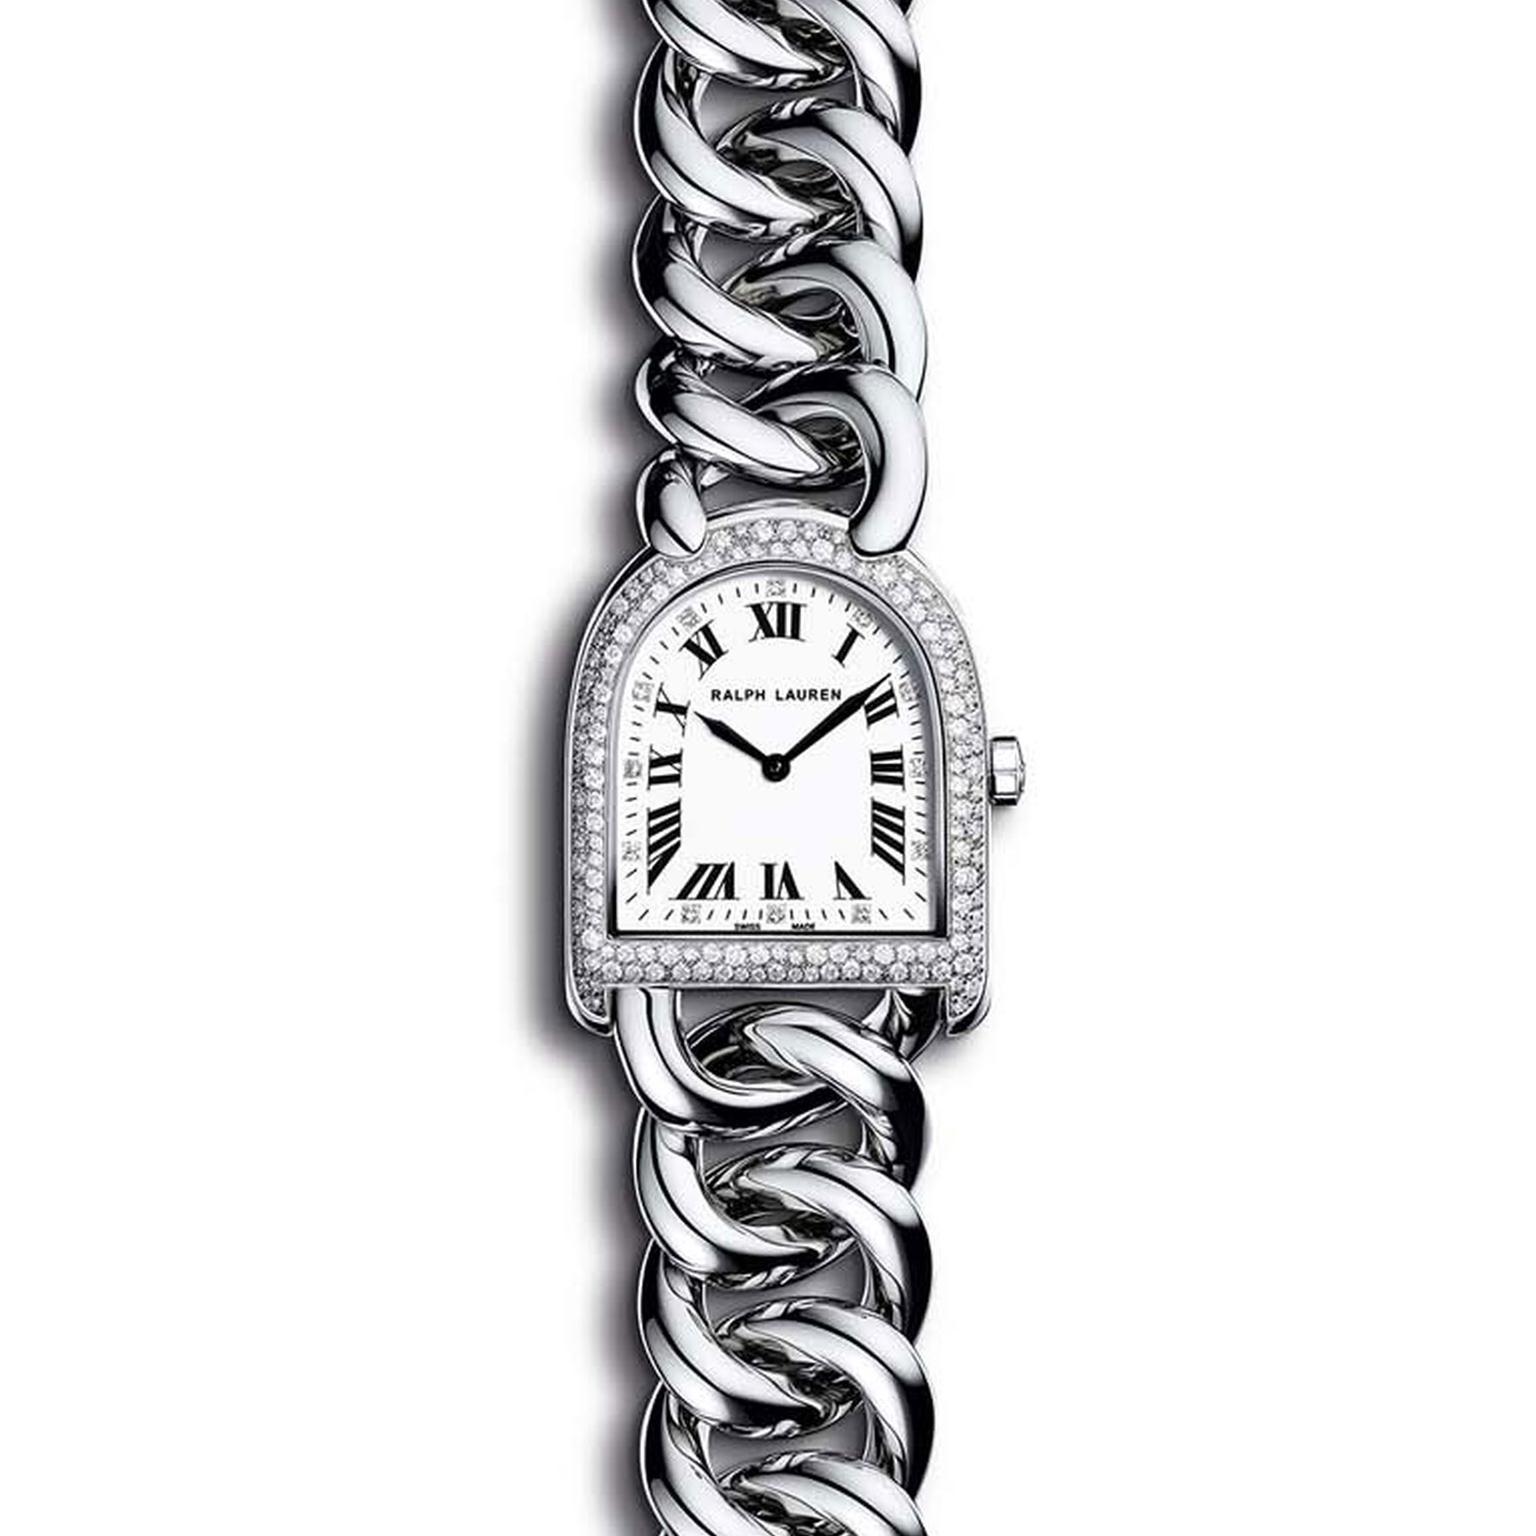 Ralph Lauren Petite Stirrup Link watch with a chain link bracelet and snow-set diamond bezel (£4,250).